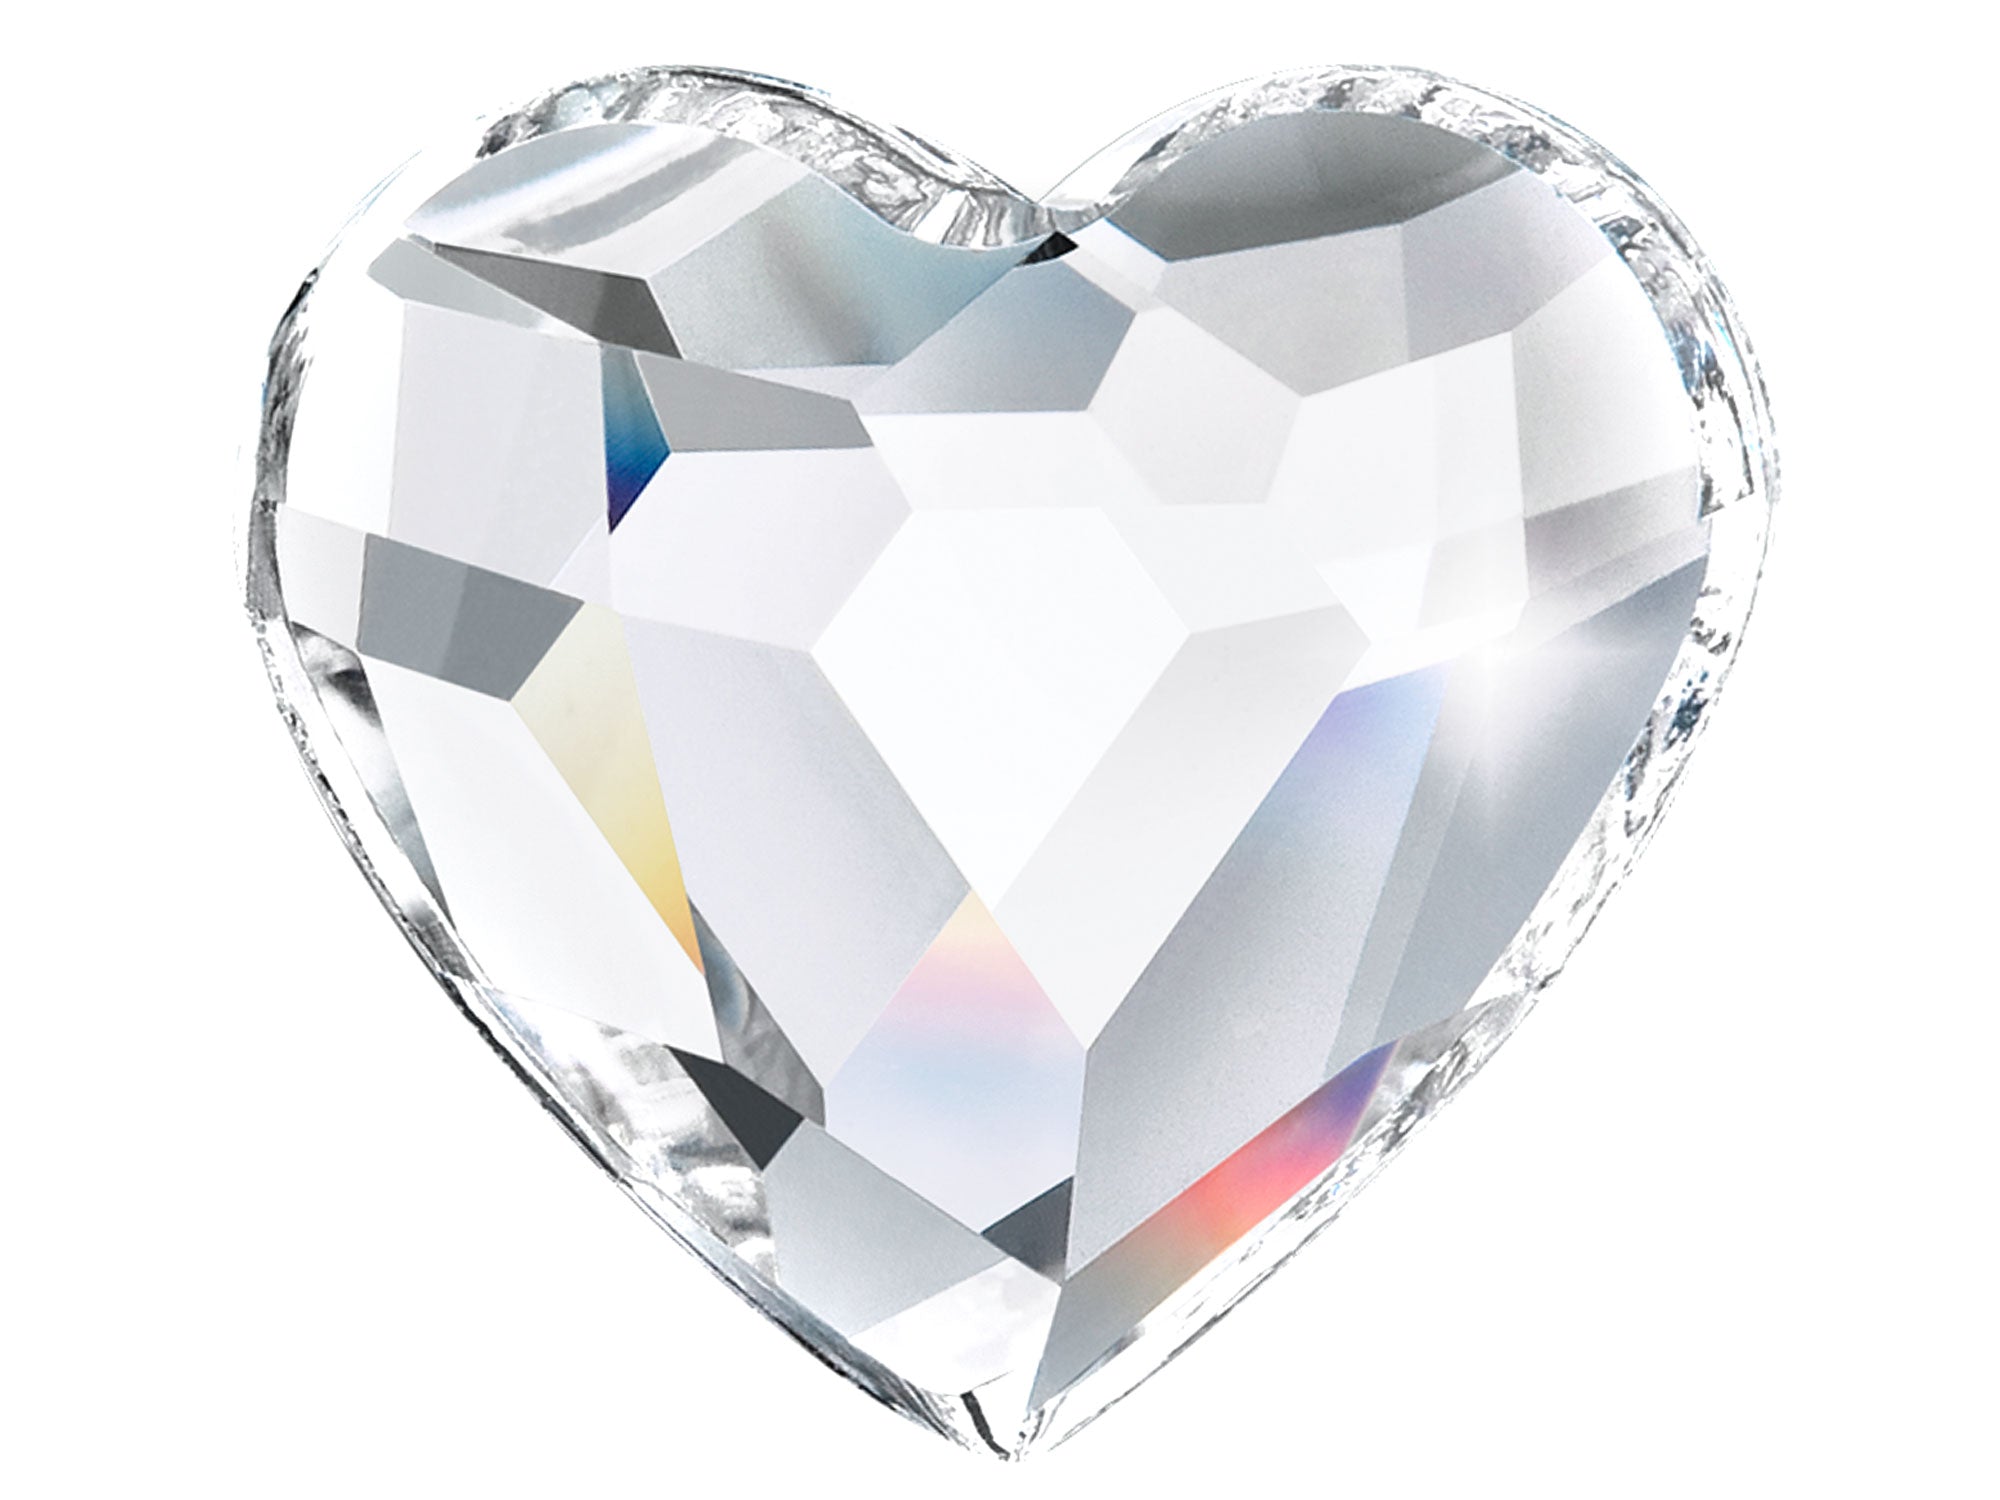 Preciosa MAXIMA SS9 Aurora Borealis Flatback Czech Crystals, 144ct